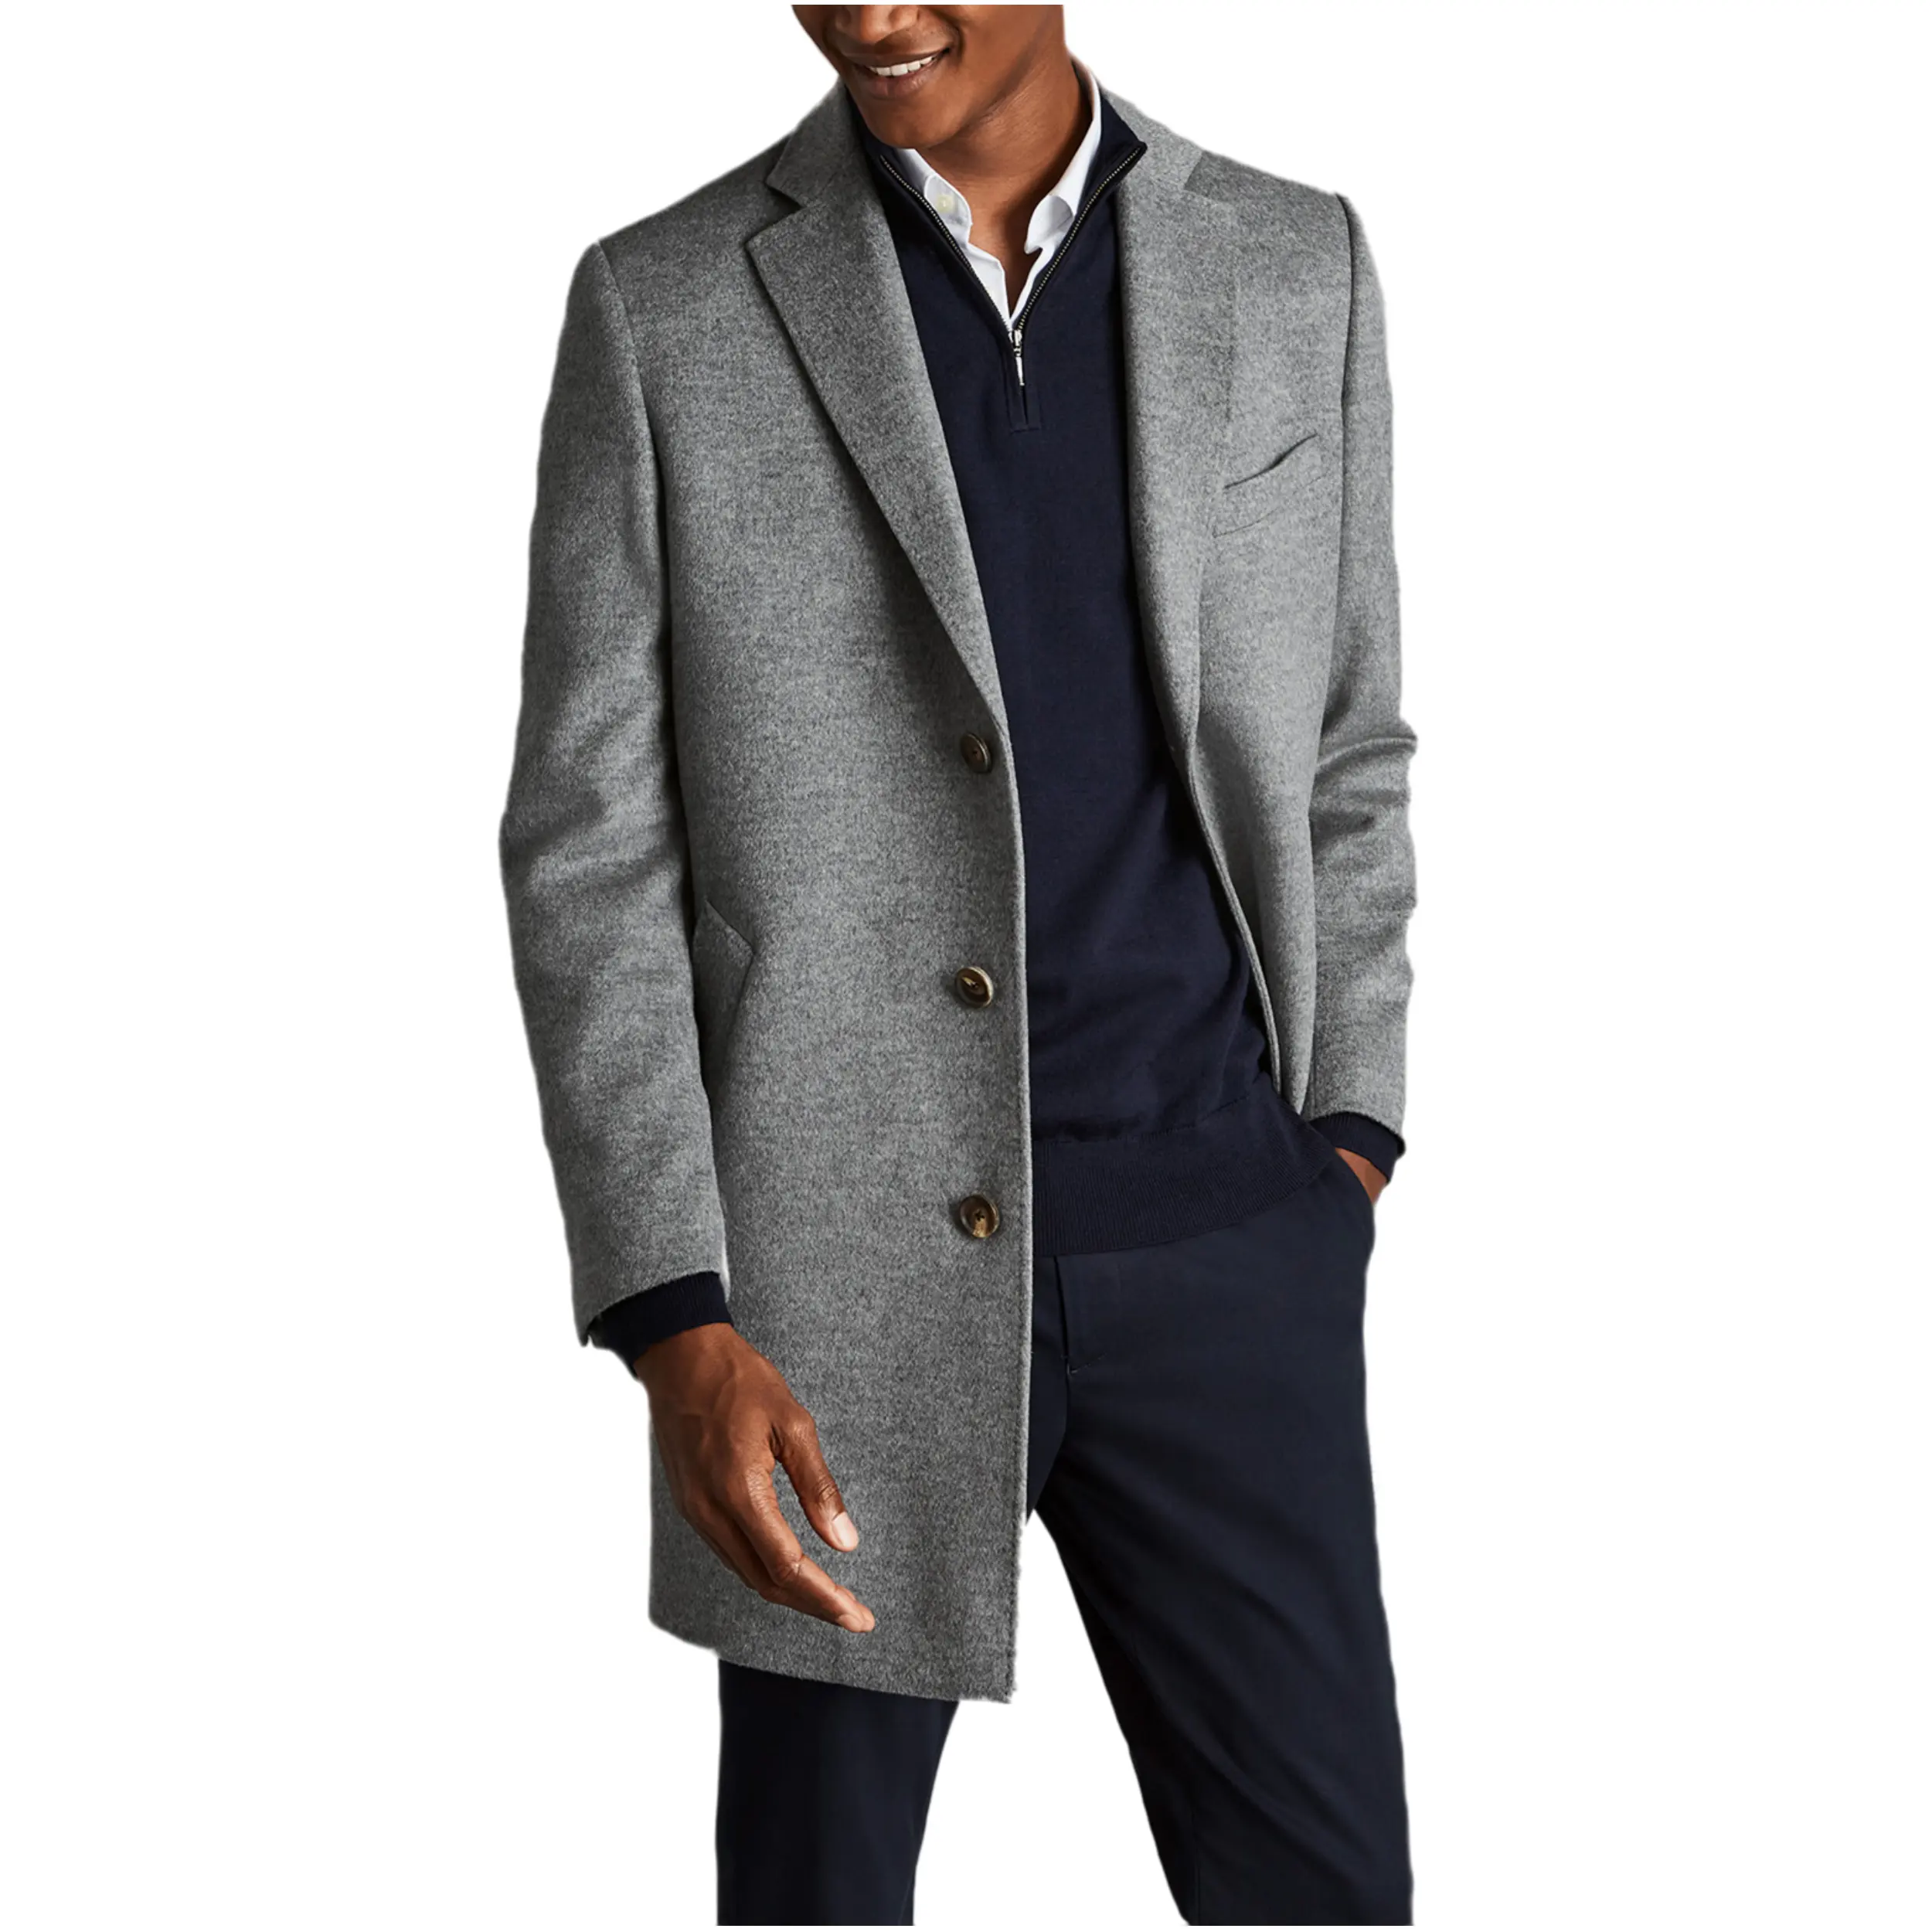 Custom Winter Outerwear Plus Velvet Warm Jacket Collar Woolen Trench Coat Slim Business Casual Fit Turn Down for Men Black Gray